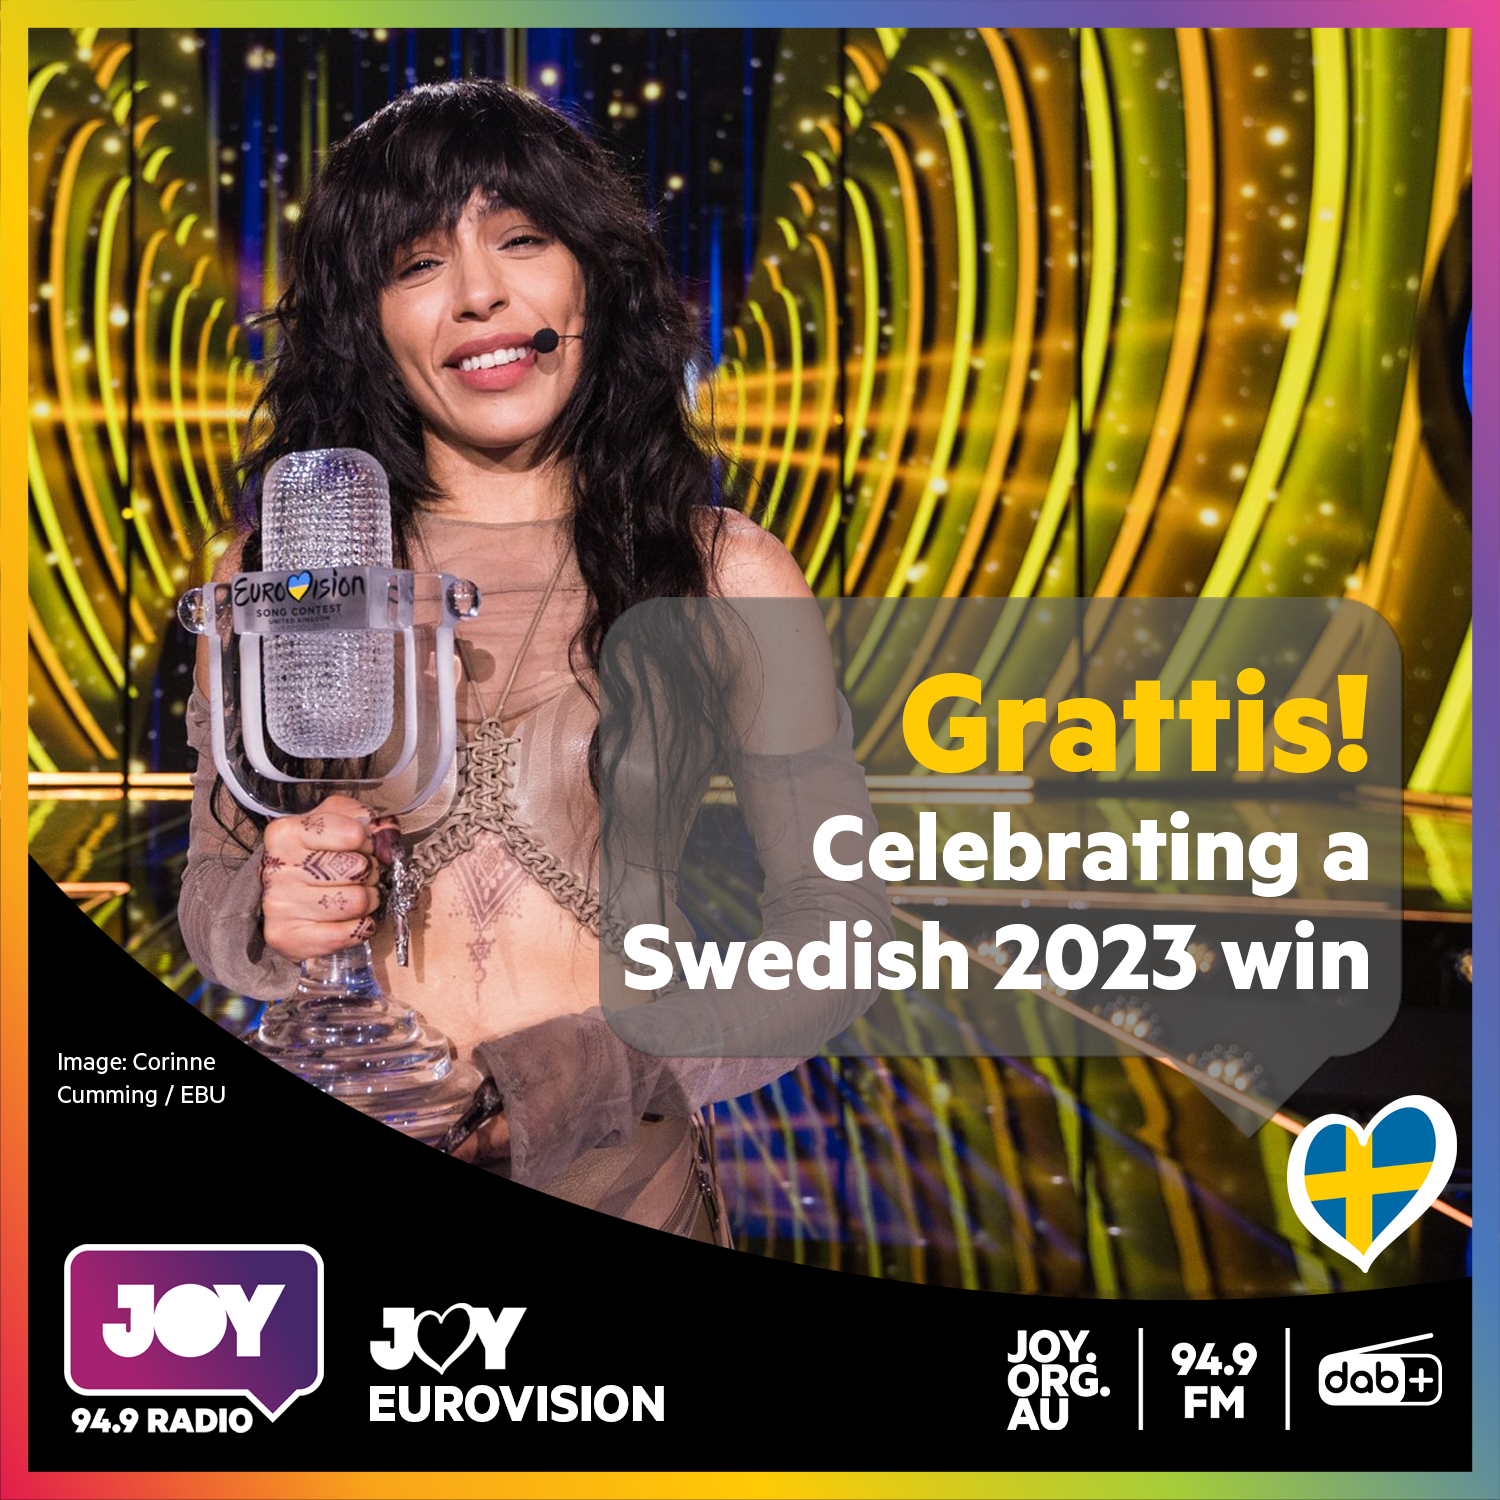 🇸🇪 Grattis: Celebrating a Swedish Eurovision 2023 win